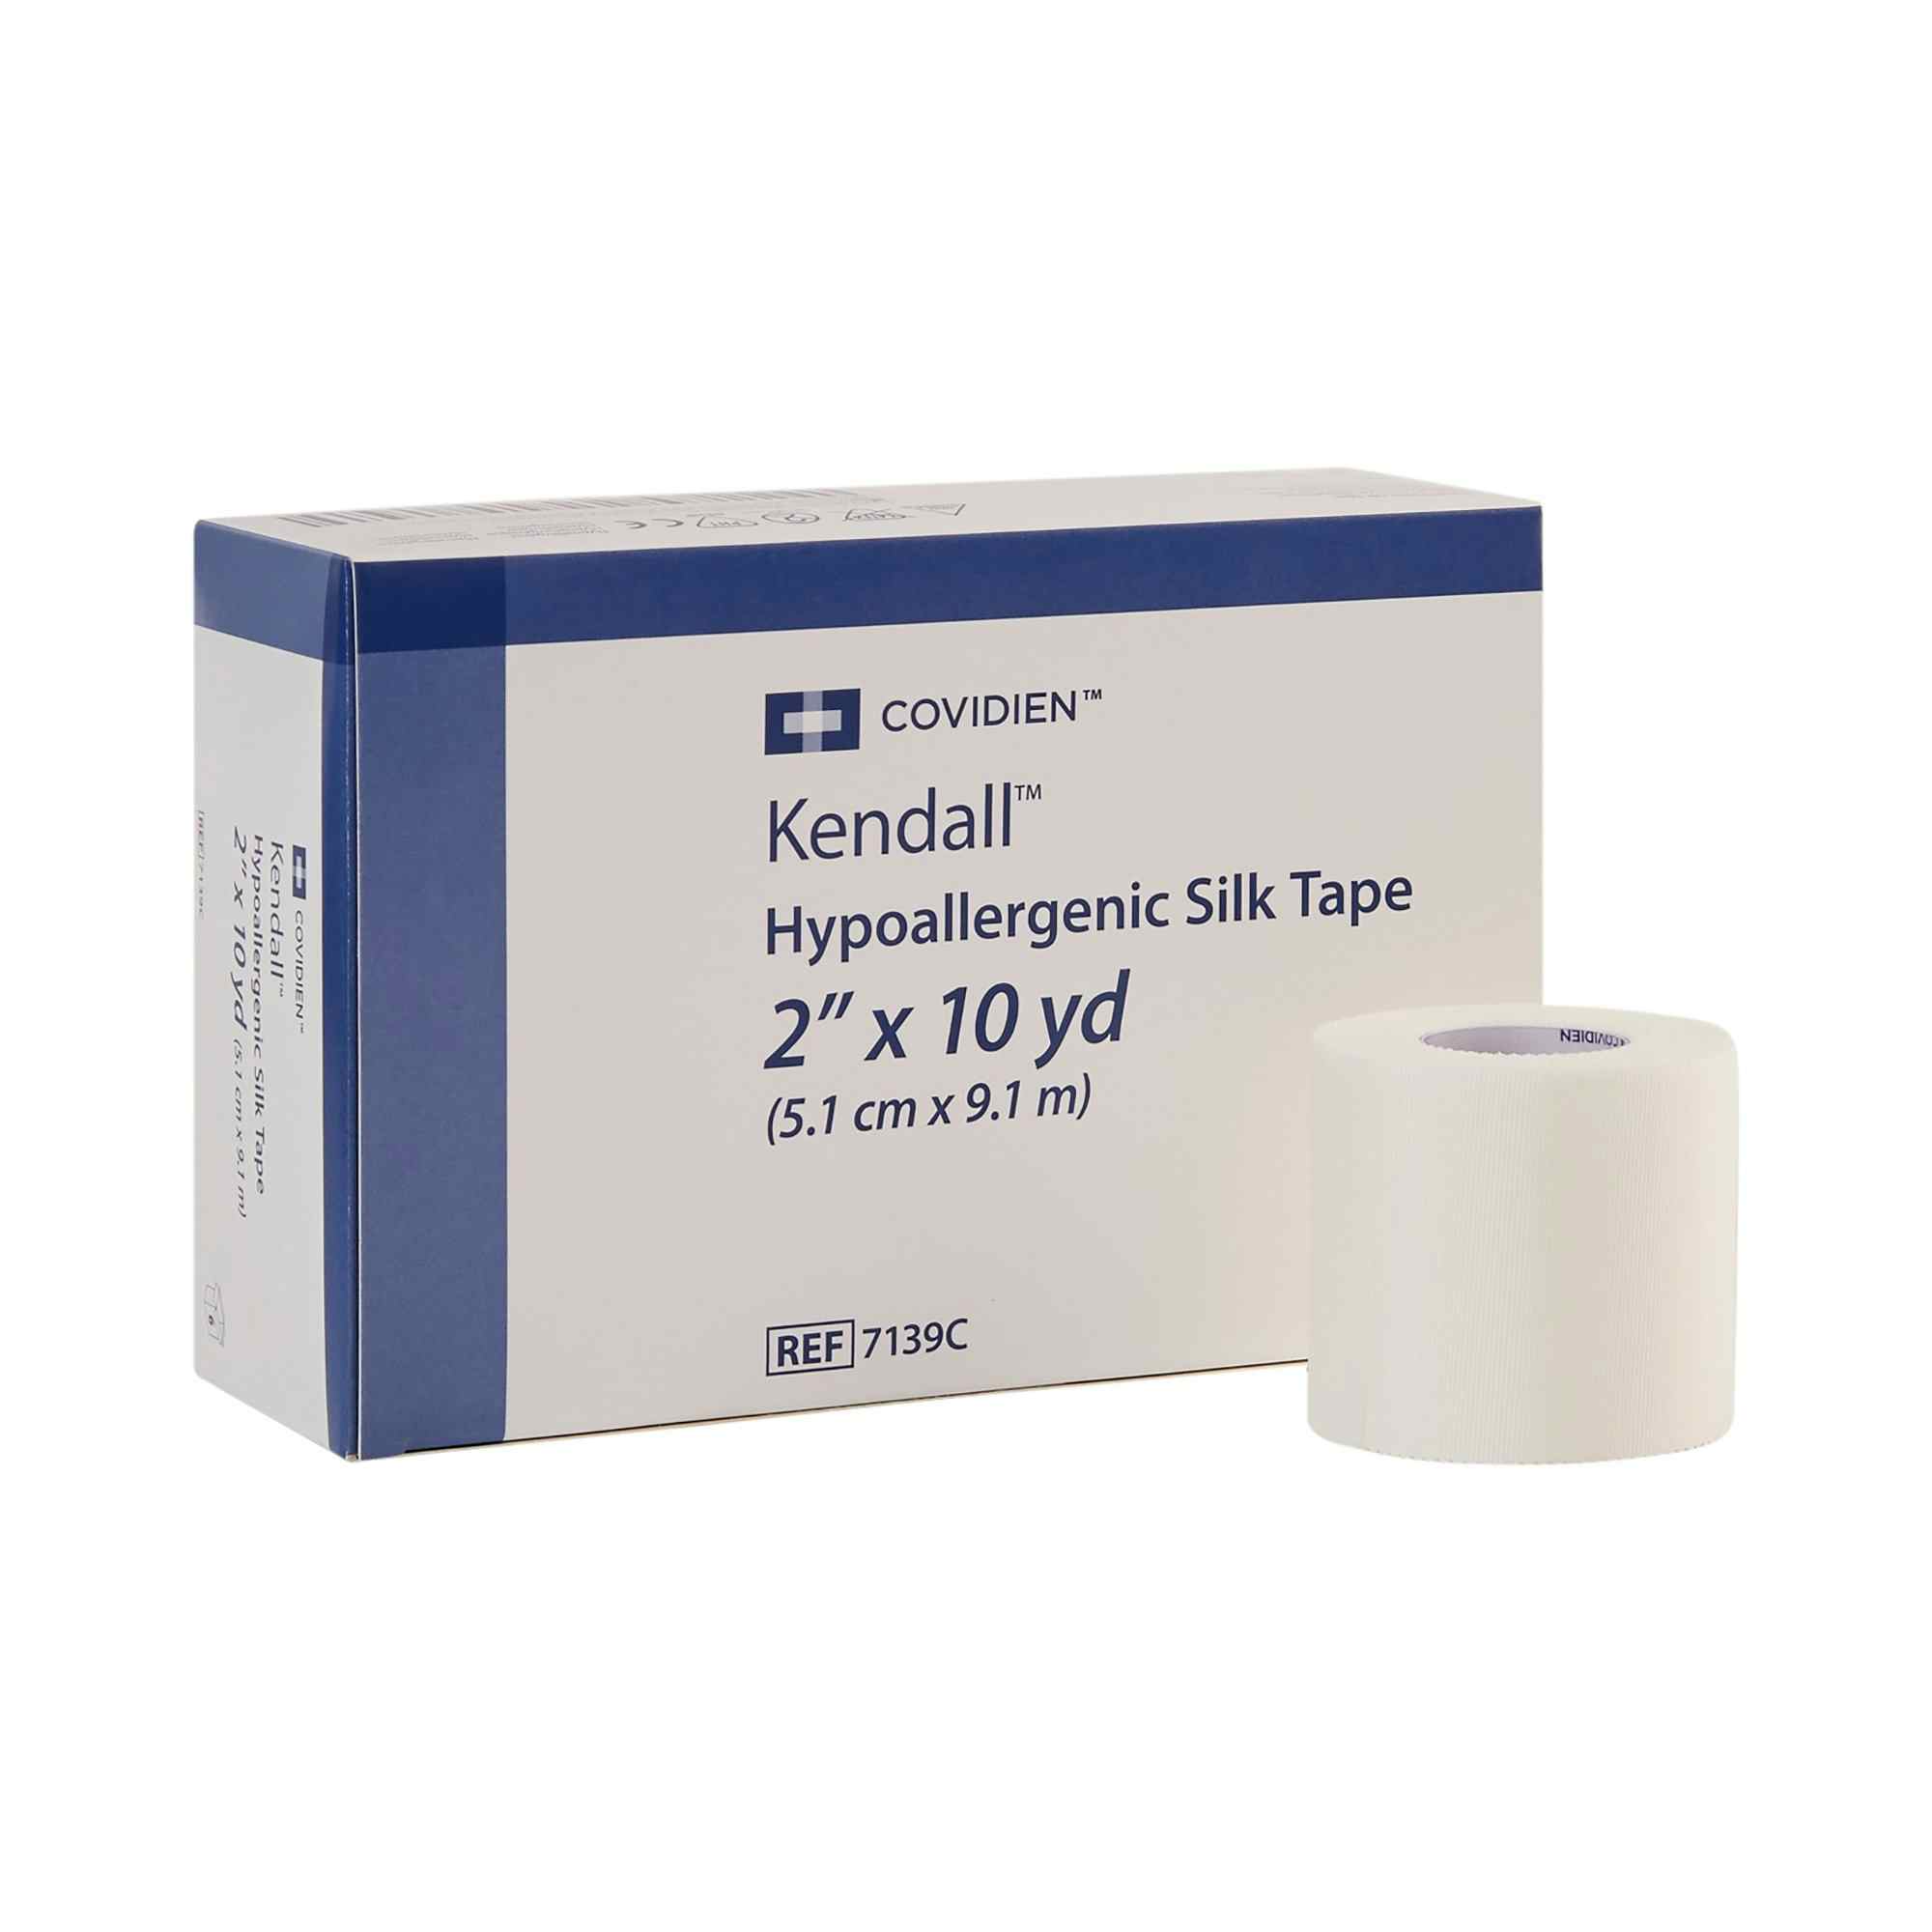 Kendall Hypoallergenic Silk-like Medical Tape, 2 Inch x 10 Yard